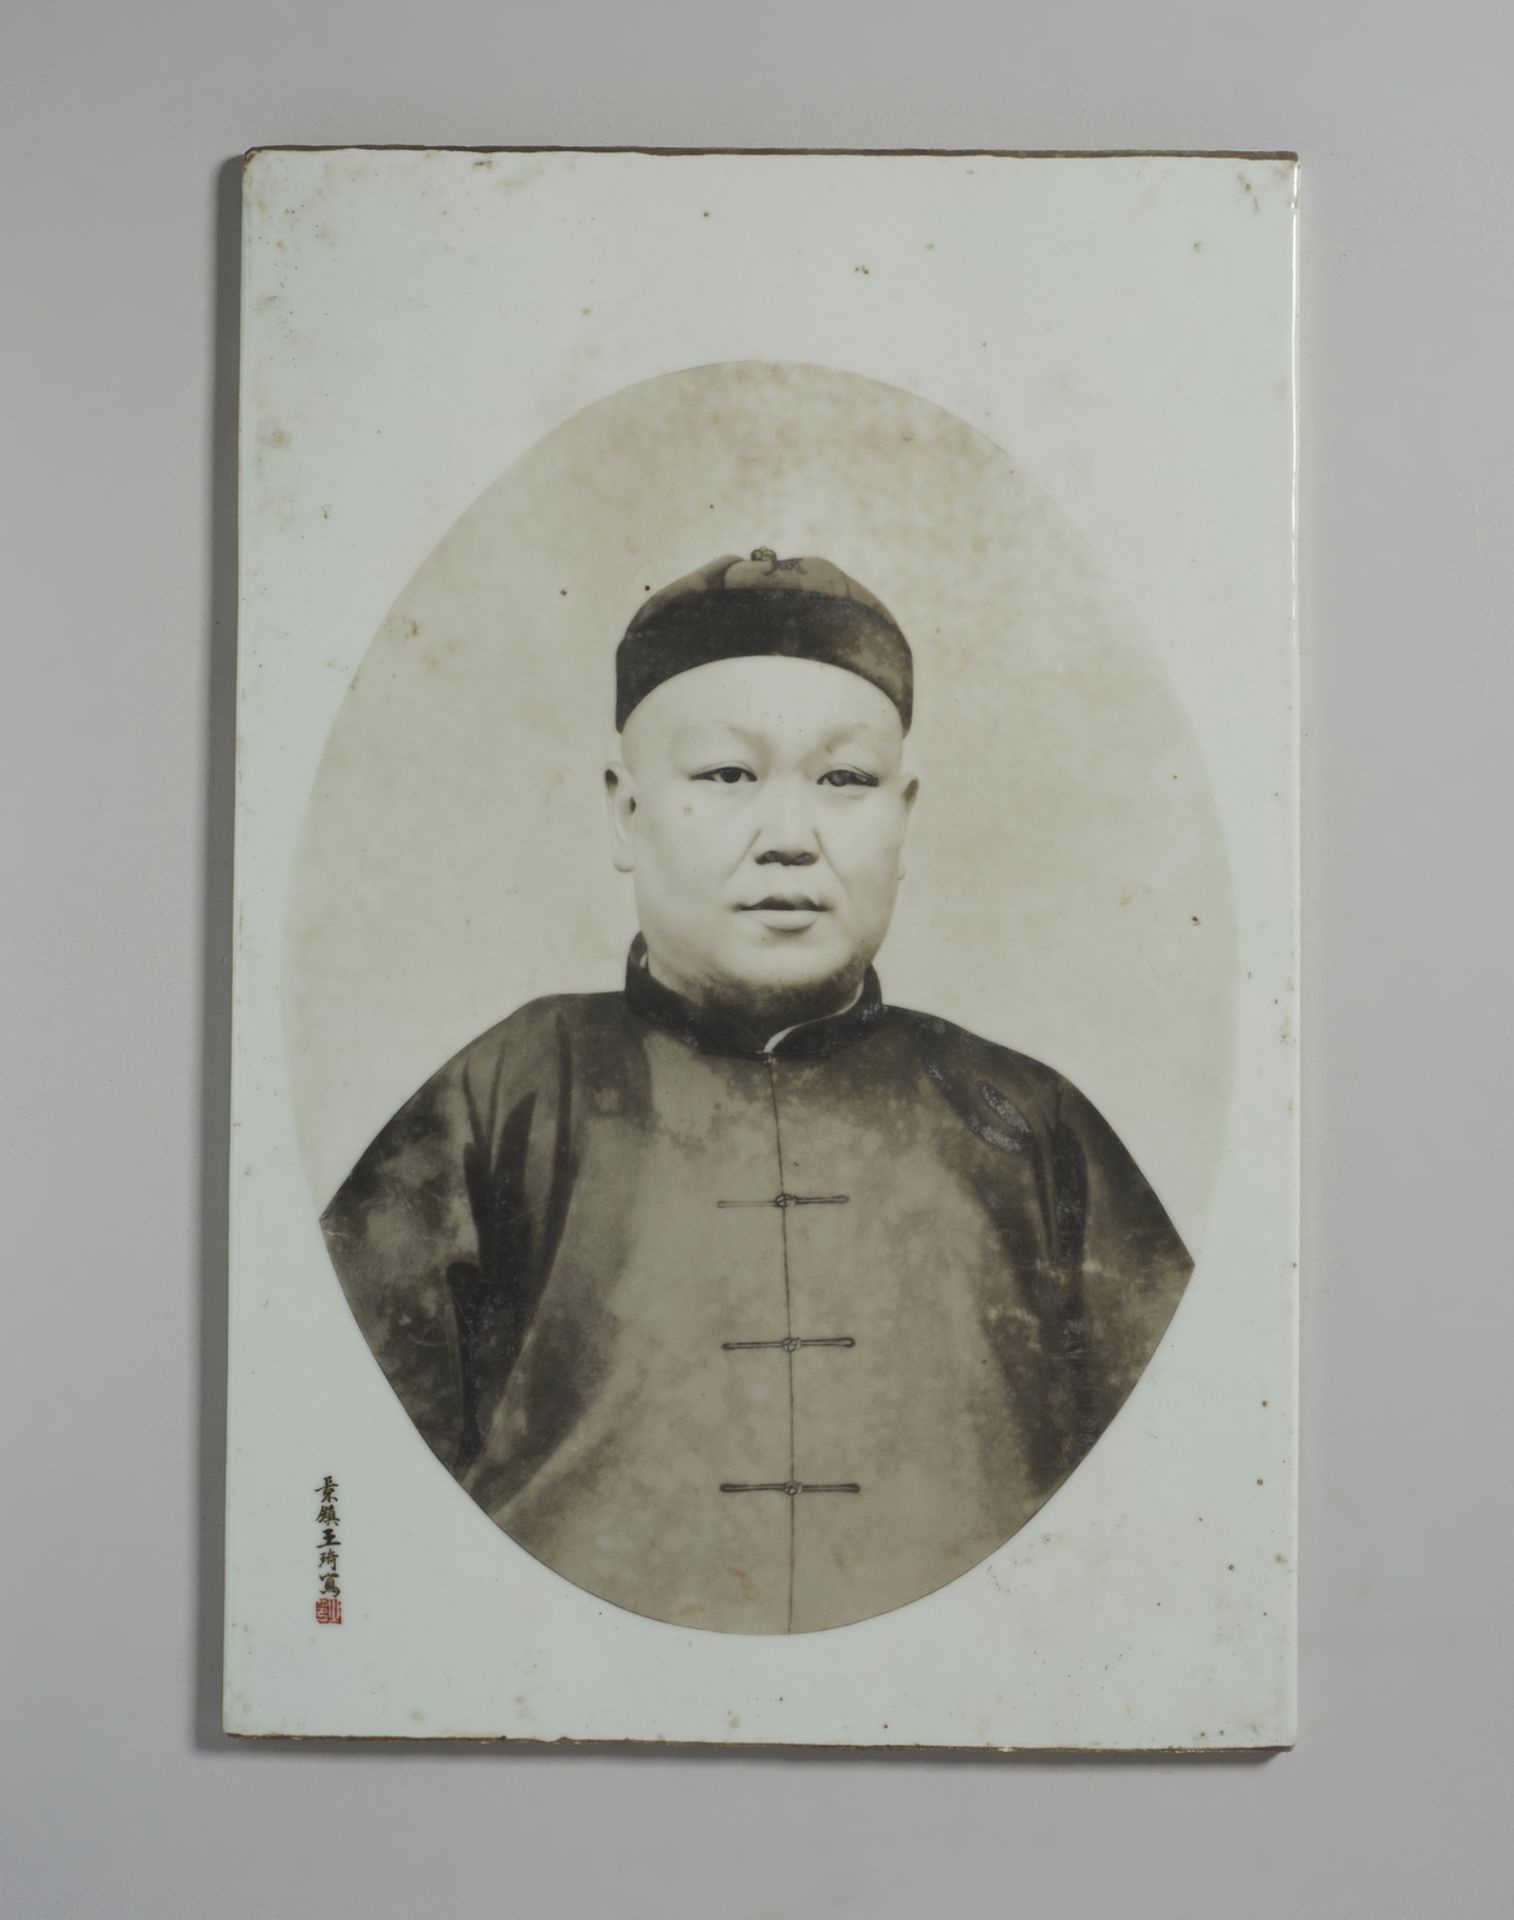 Porcelain plaque with portrait of a man. China, Republic period, 20th century. Cm 29,50 x 44,00